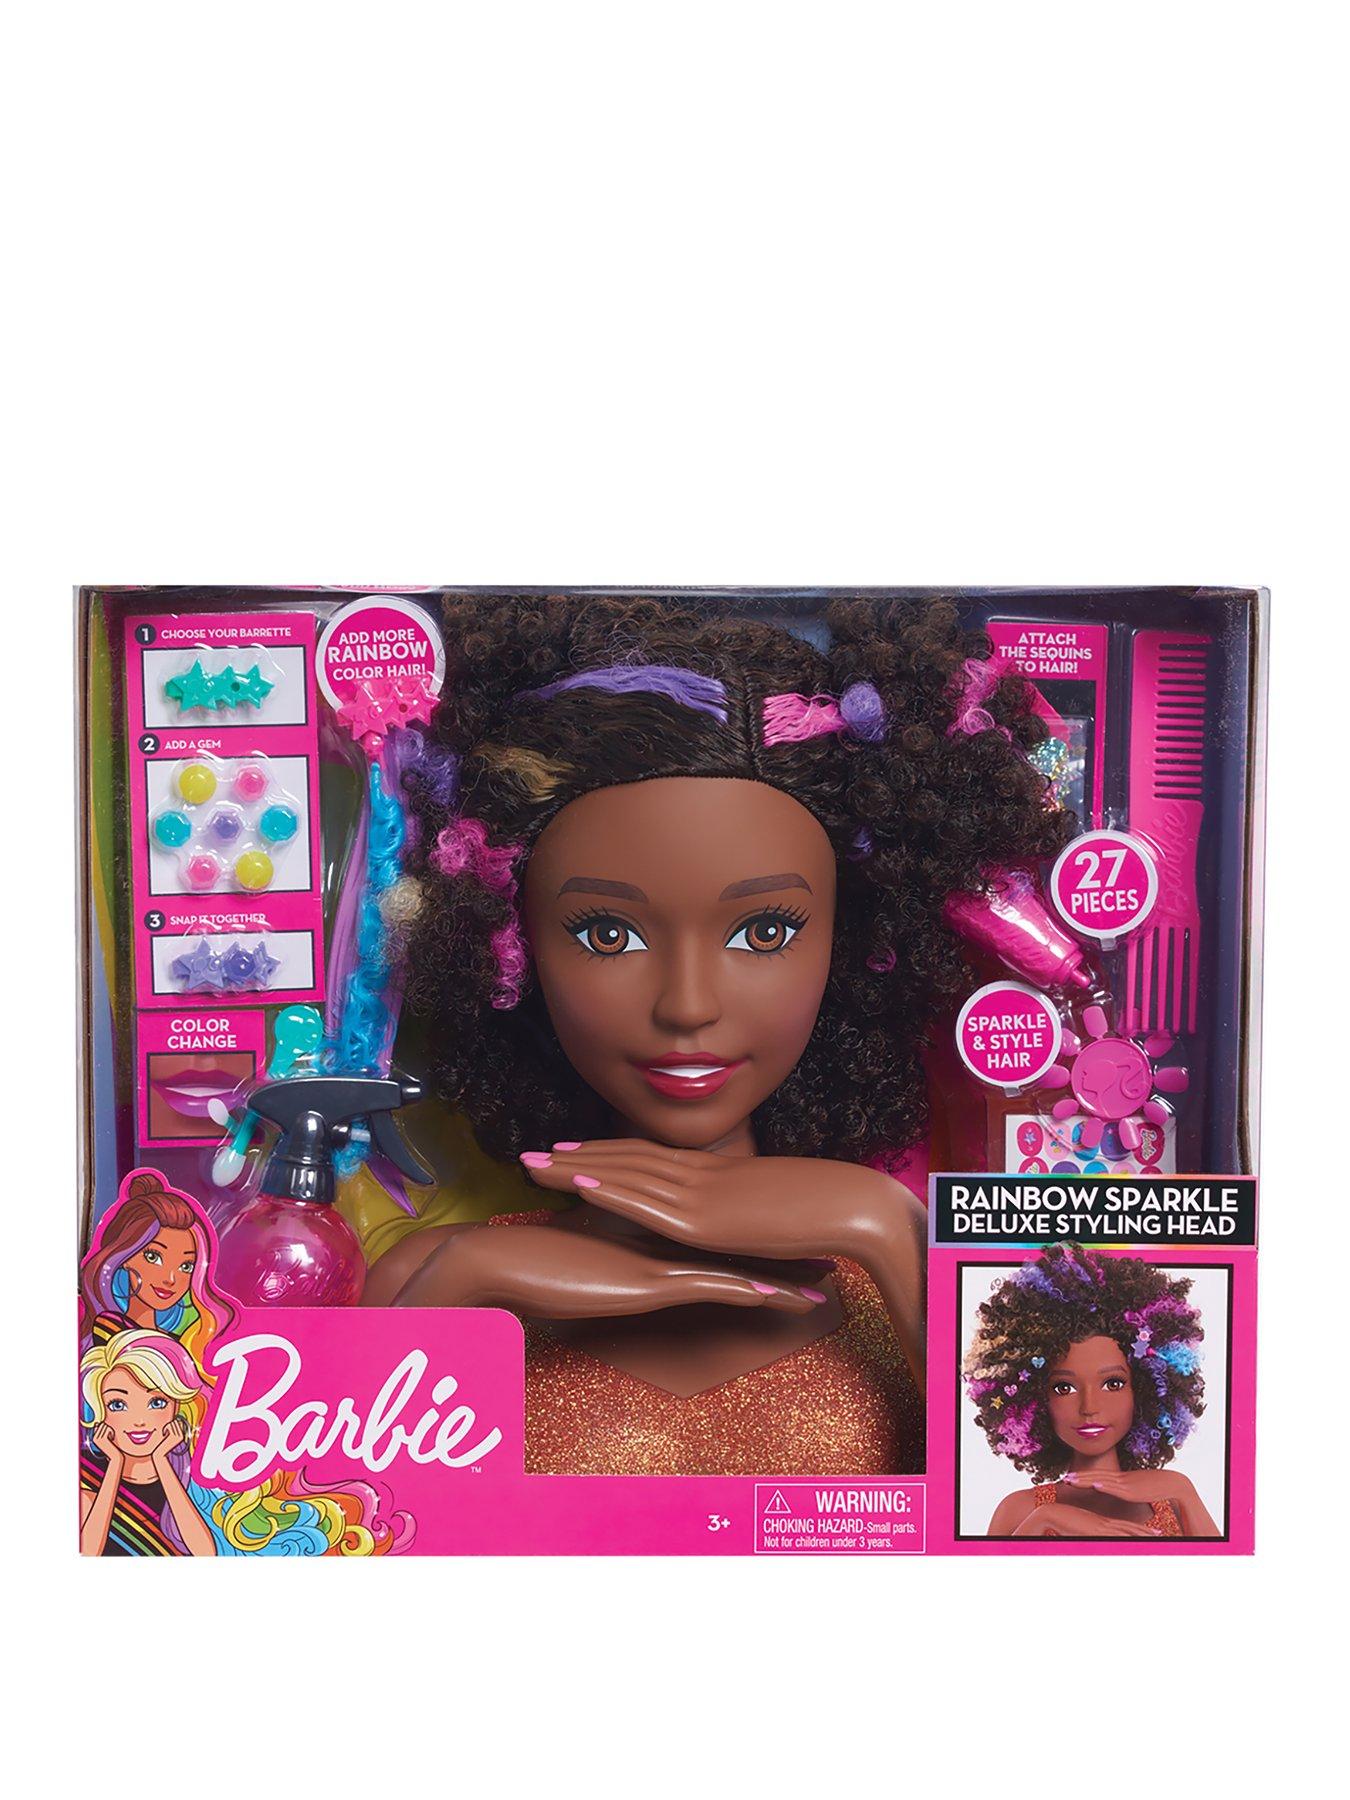 barbie rainbow sparkle deluxe styling head